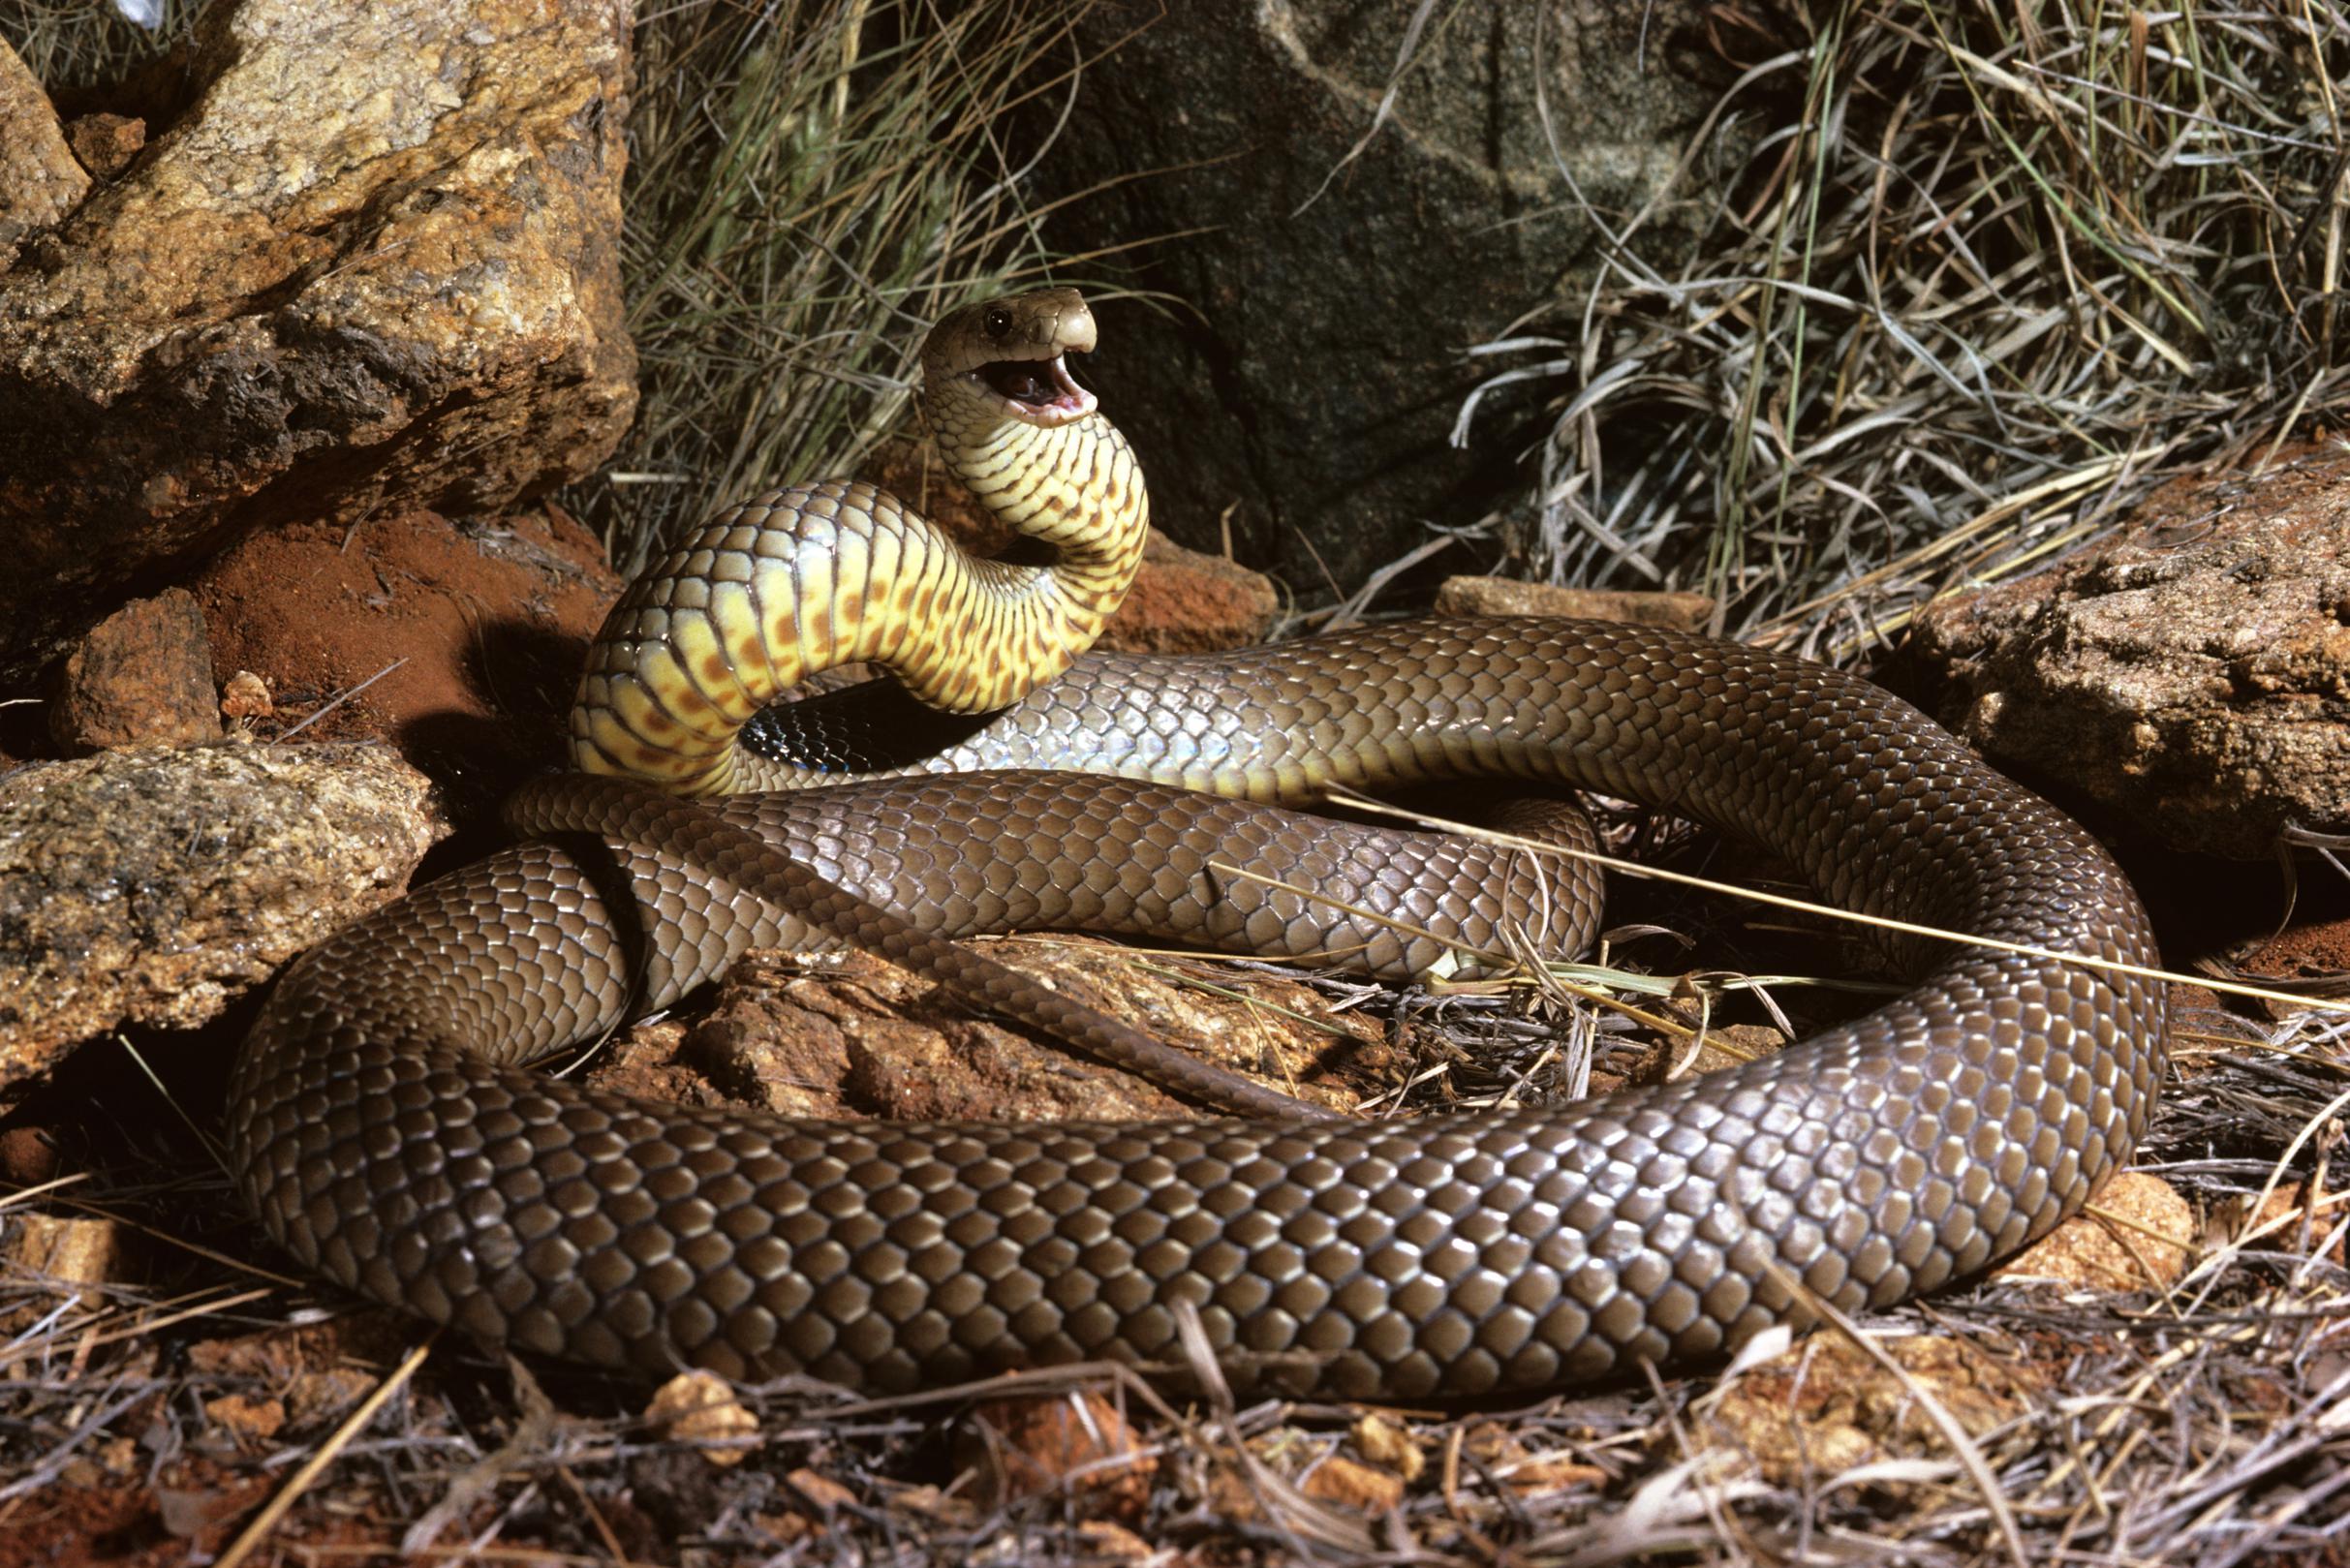 47-year-old Australian dies after attempting to capture snake in kindergarten